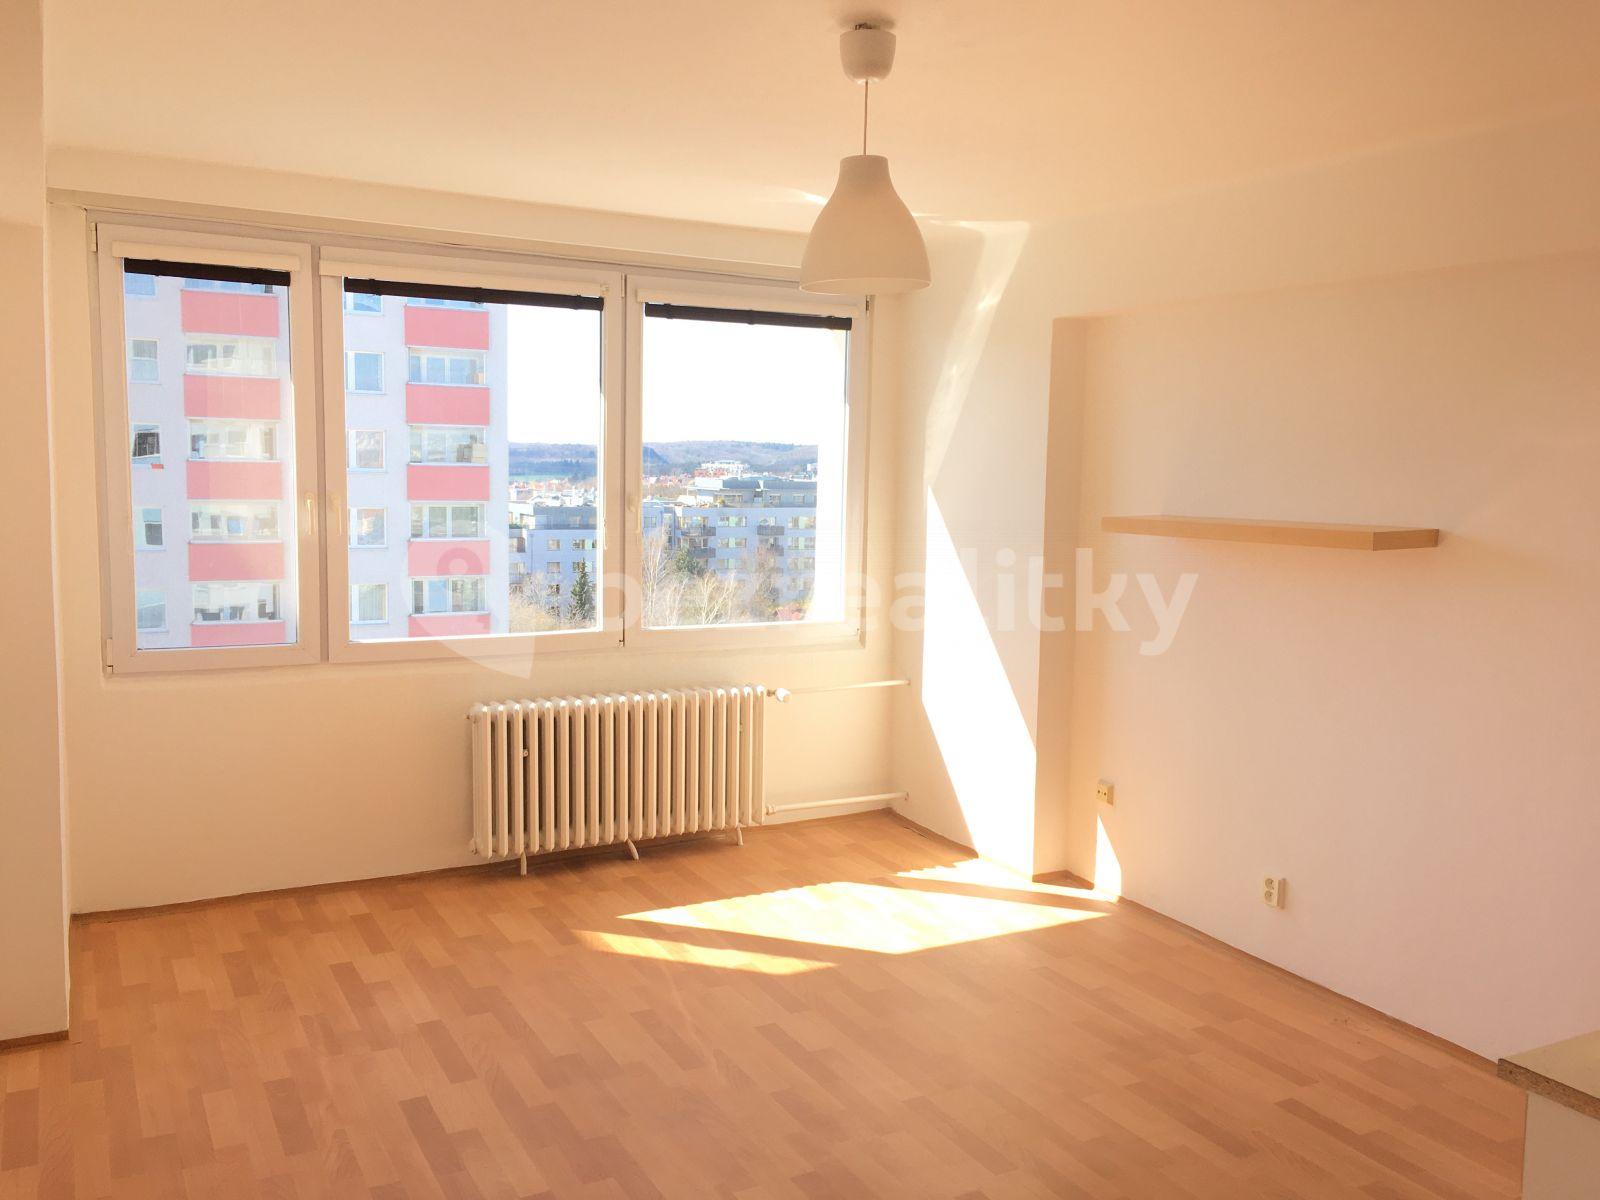 Small studio flat to rent, 22 m², Evropská, Prague, Prague